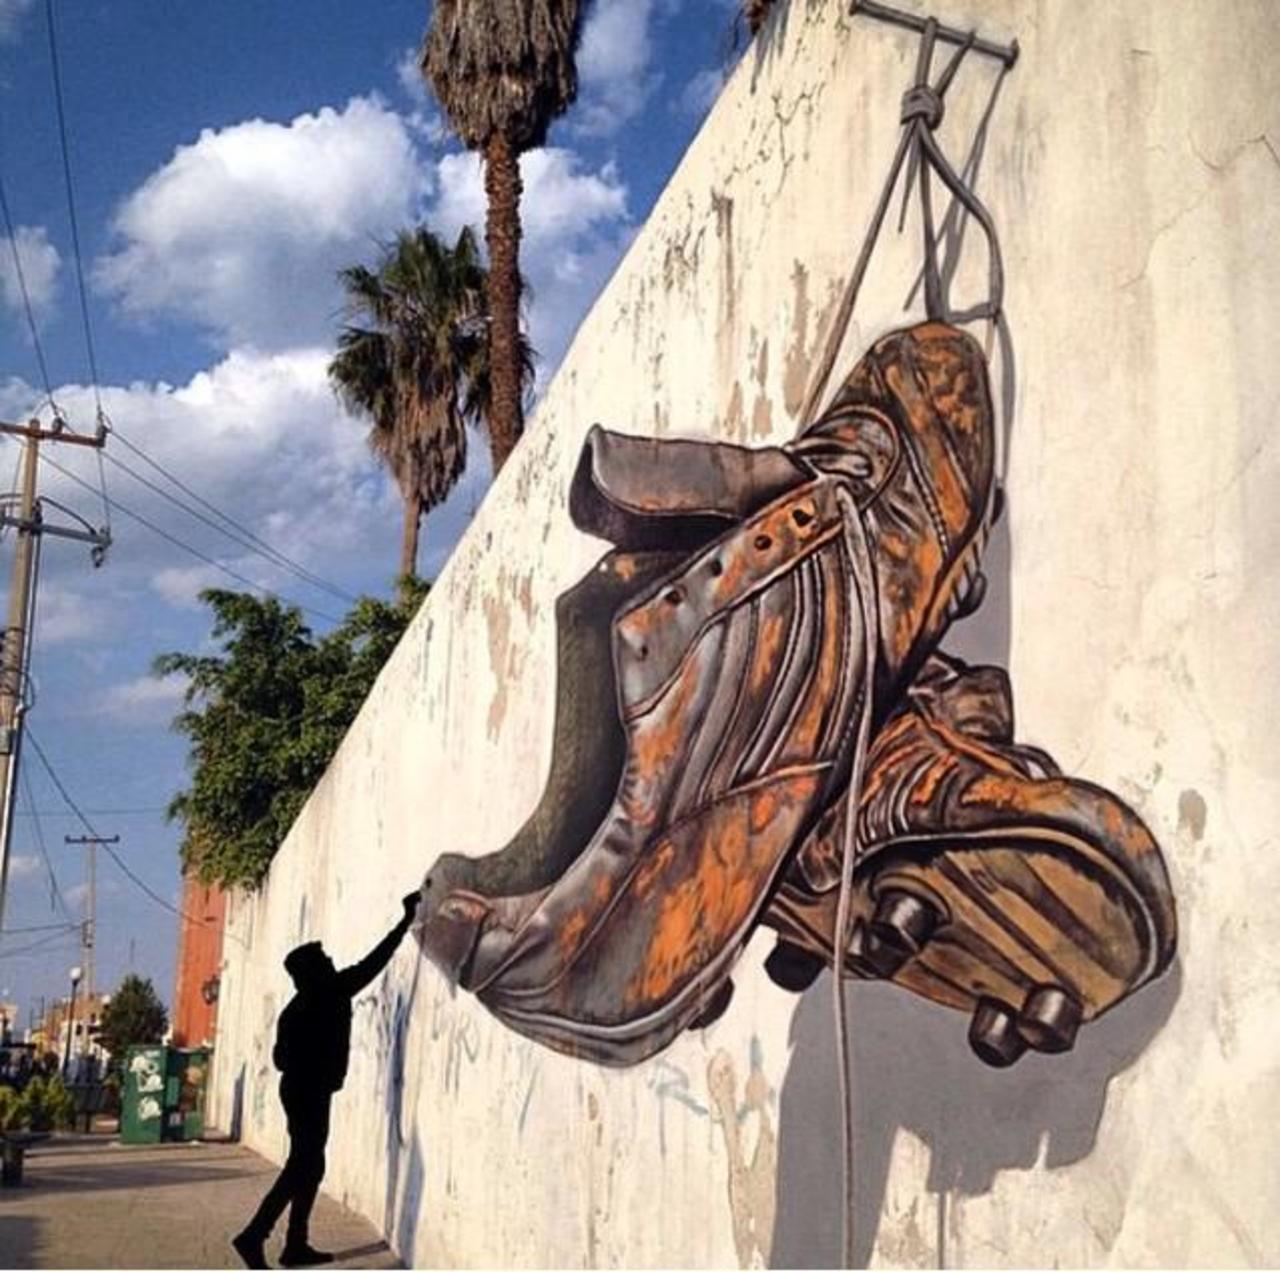 Awesome anamorphic 3D Street Art by Juandres Vera 

#art #graffiti #mural #streetart http://t.co/haMxWEQ3Mf